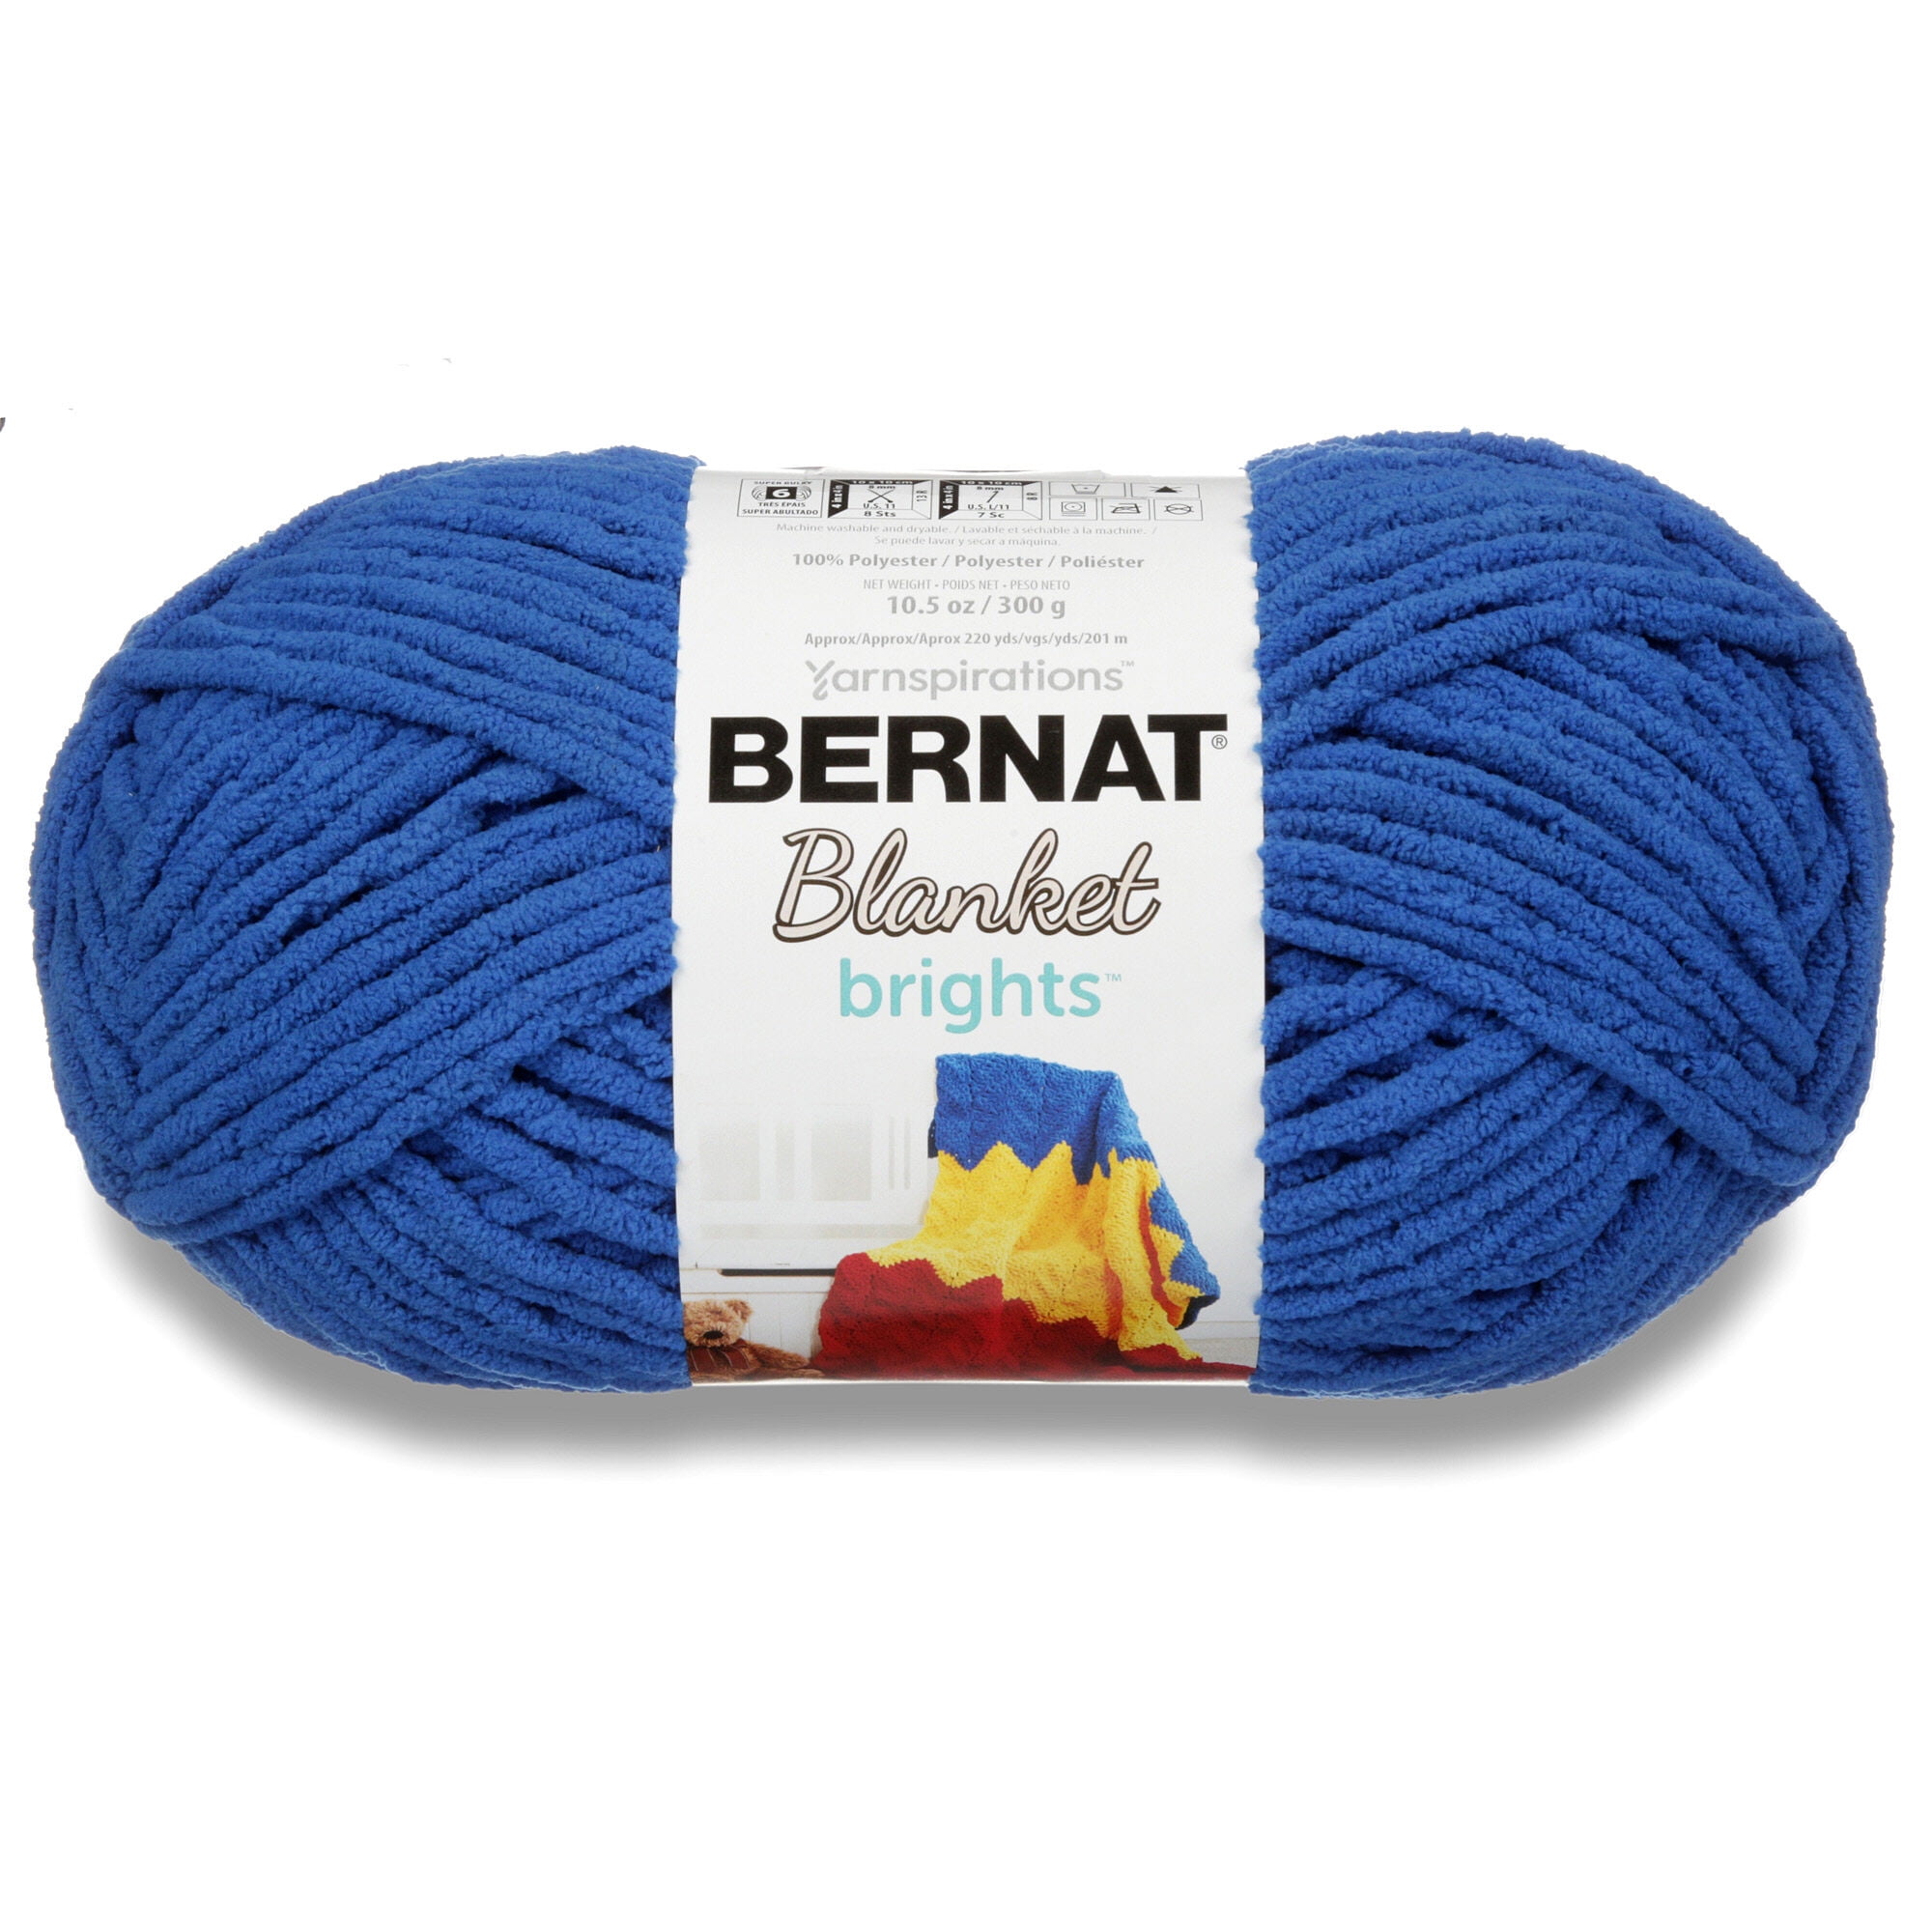 Bernat Blanket Brights Busy Blue Yarn - 2 Pack of 300g/10.5oz - Polyester -  6 Super Bulky - 220 Yards - Knitting/Crochet